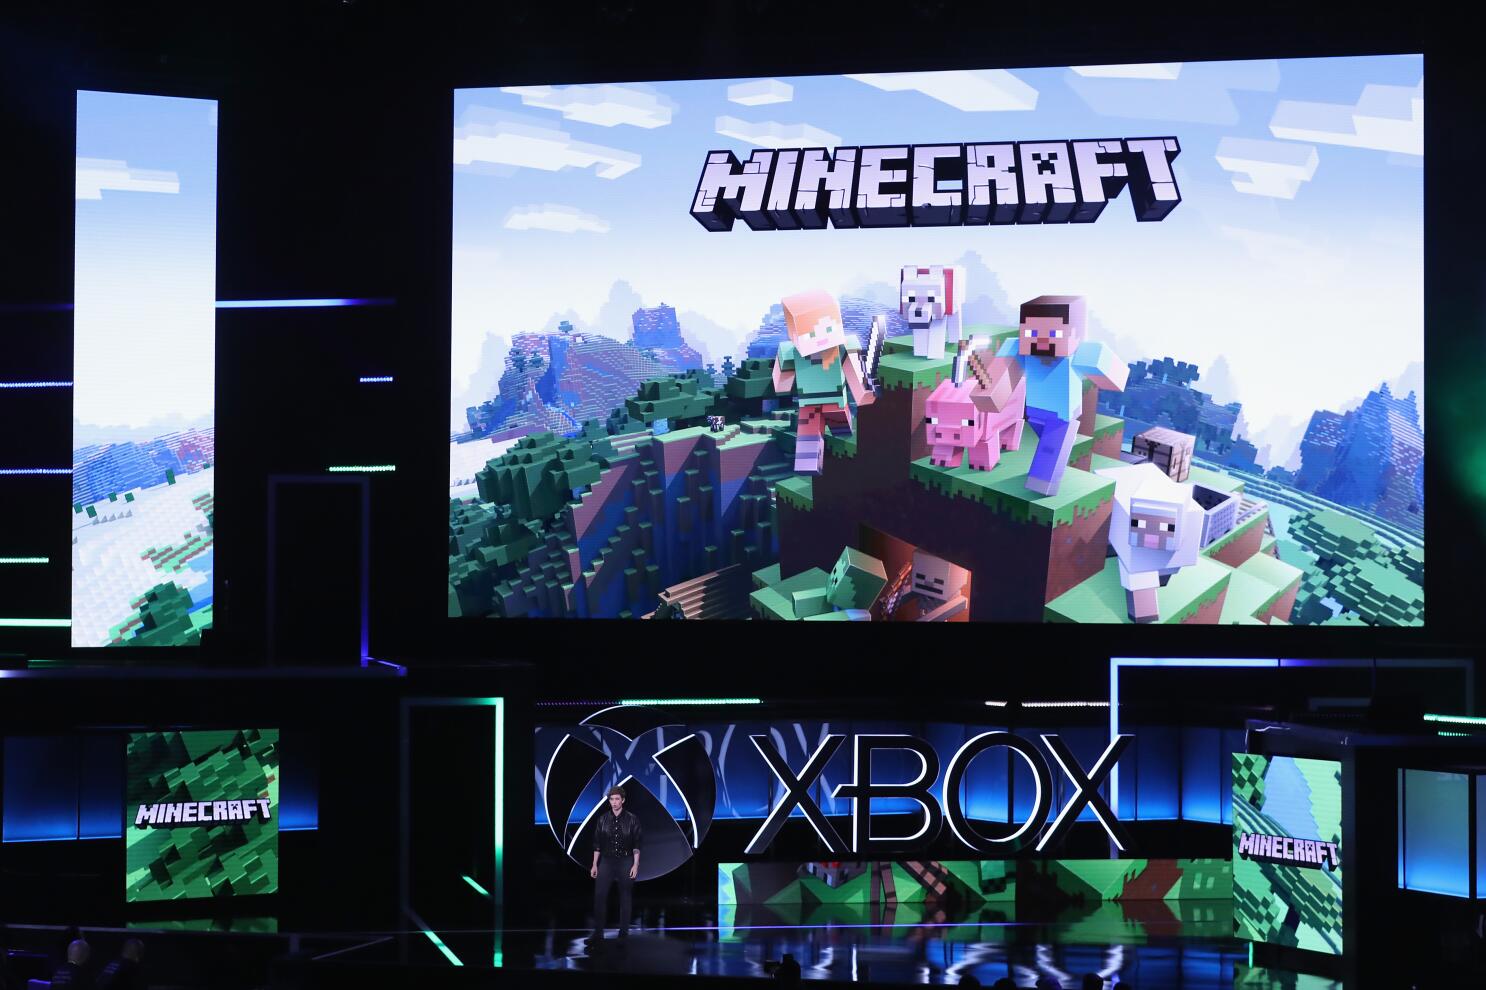 Technoblade dies: 'Minecraft' community salutes  star - Los